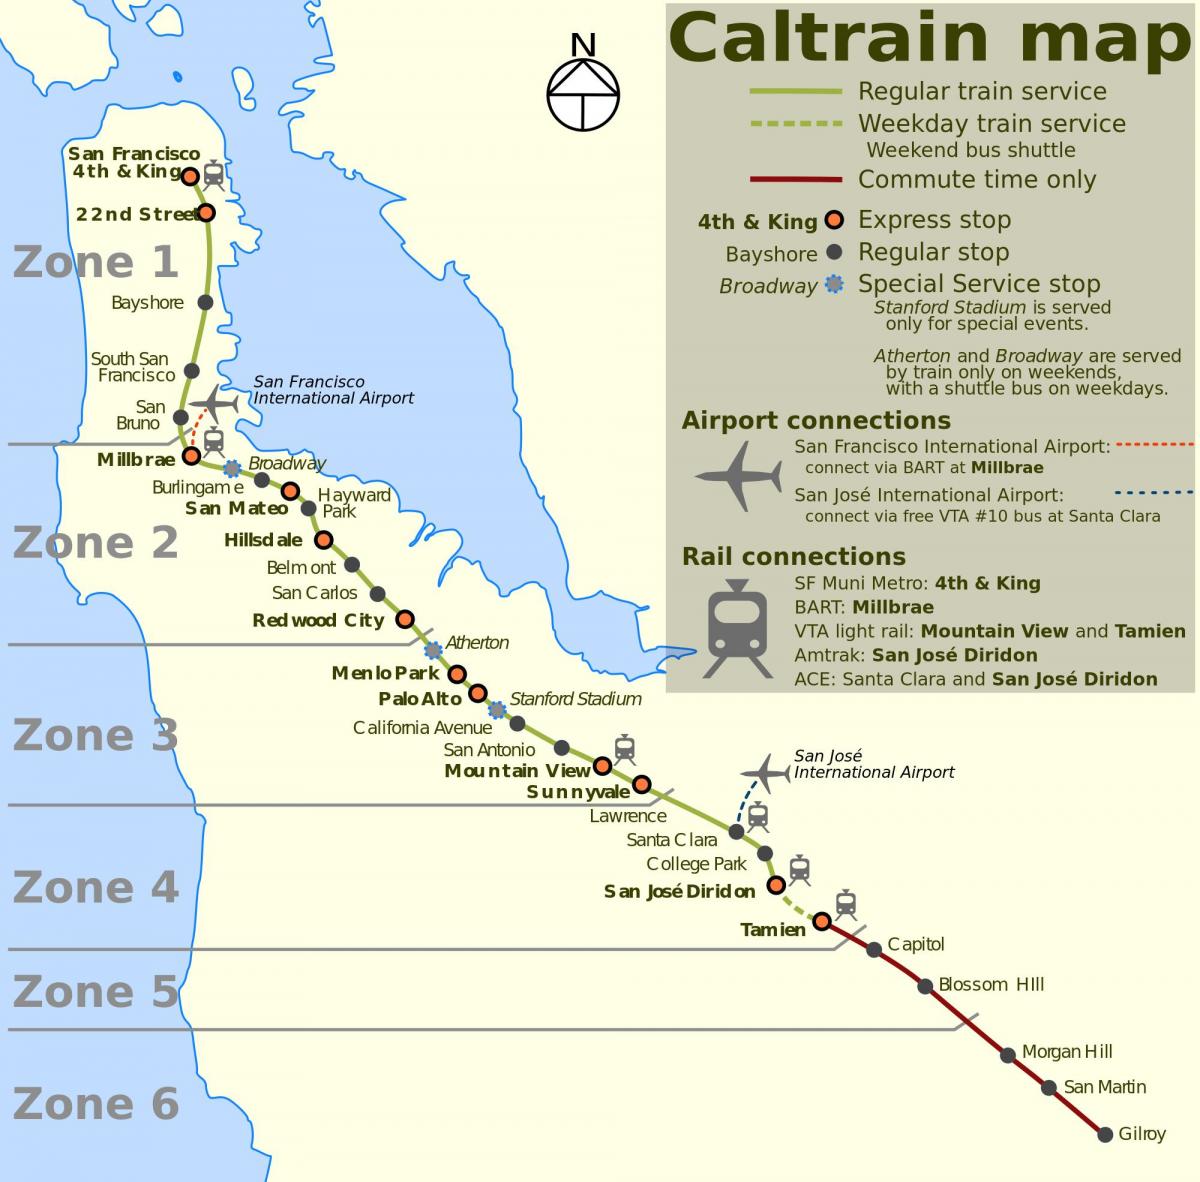 San Francisco caltrain göster